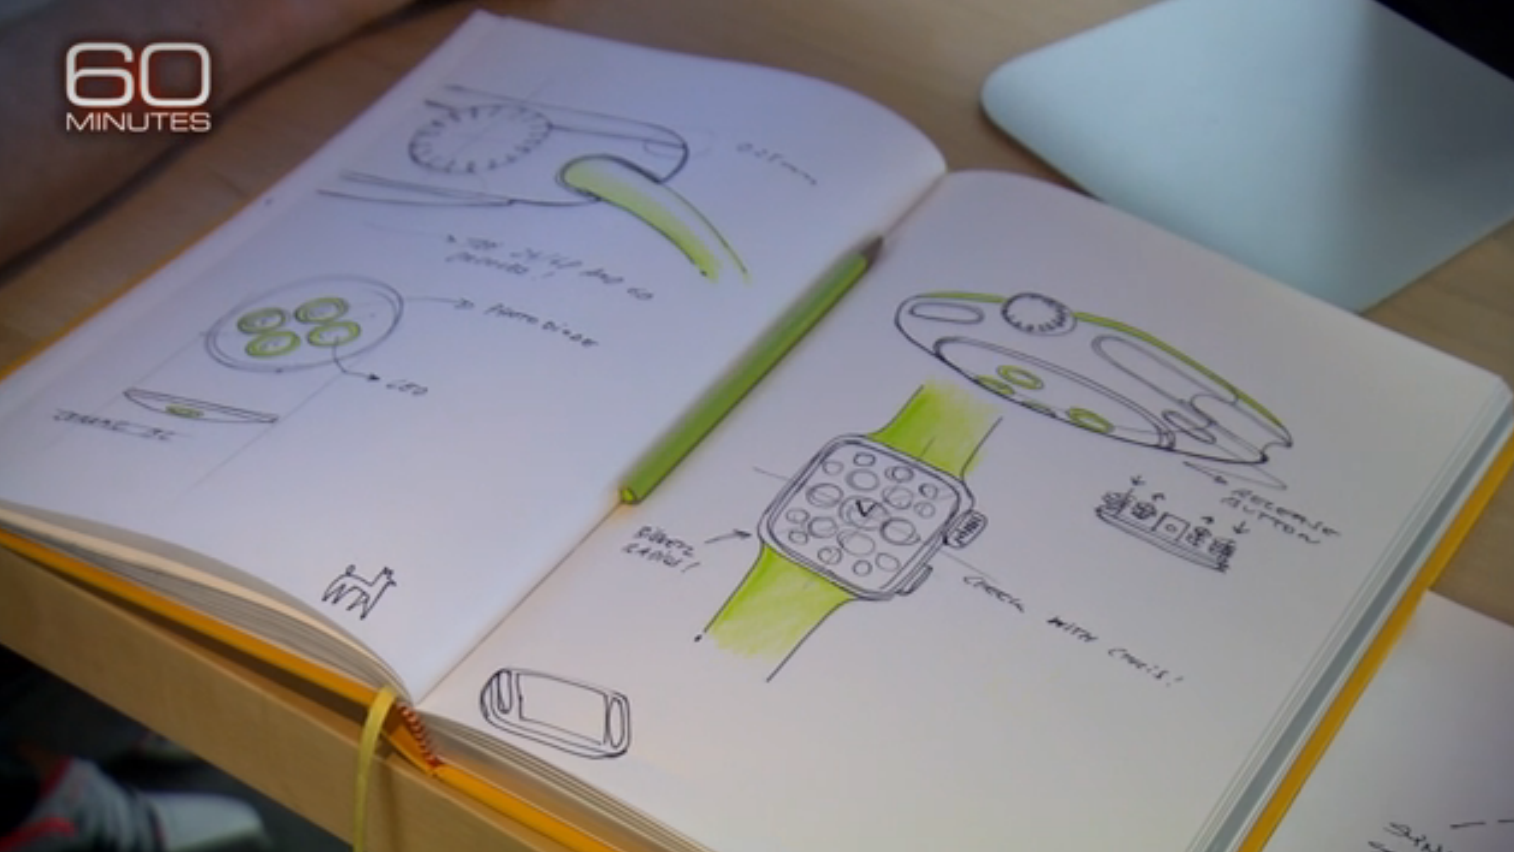 Jony Ive's 'sketchbook' showing the Apple Watch design